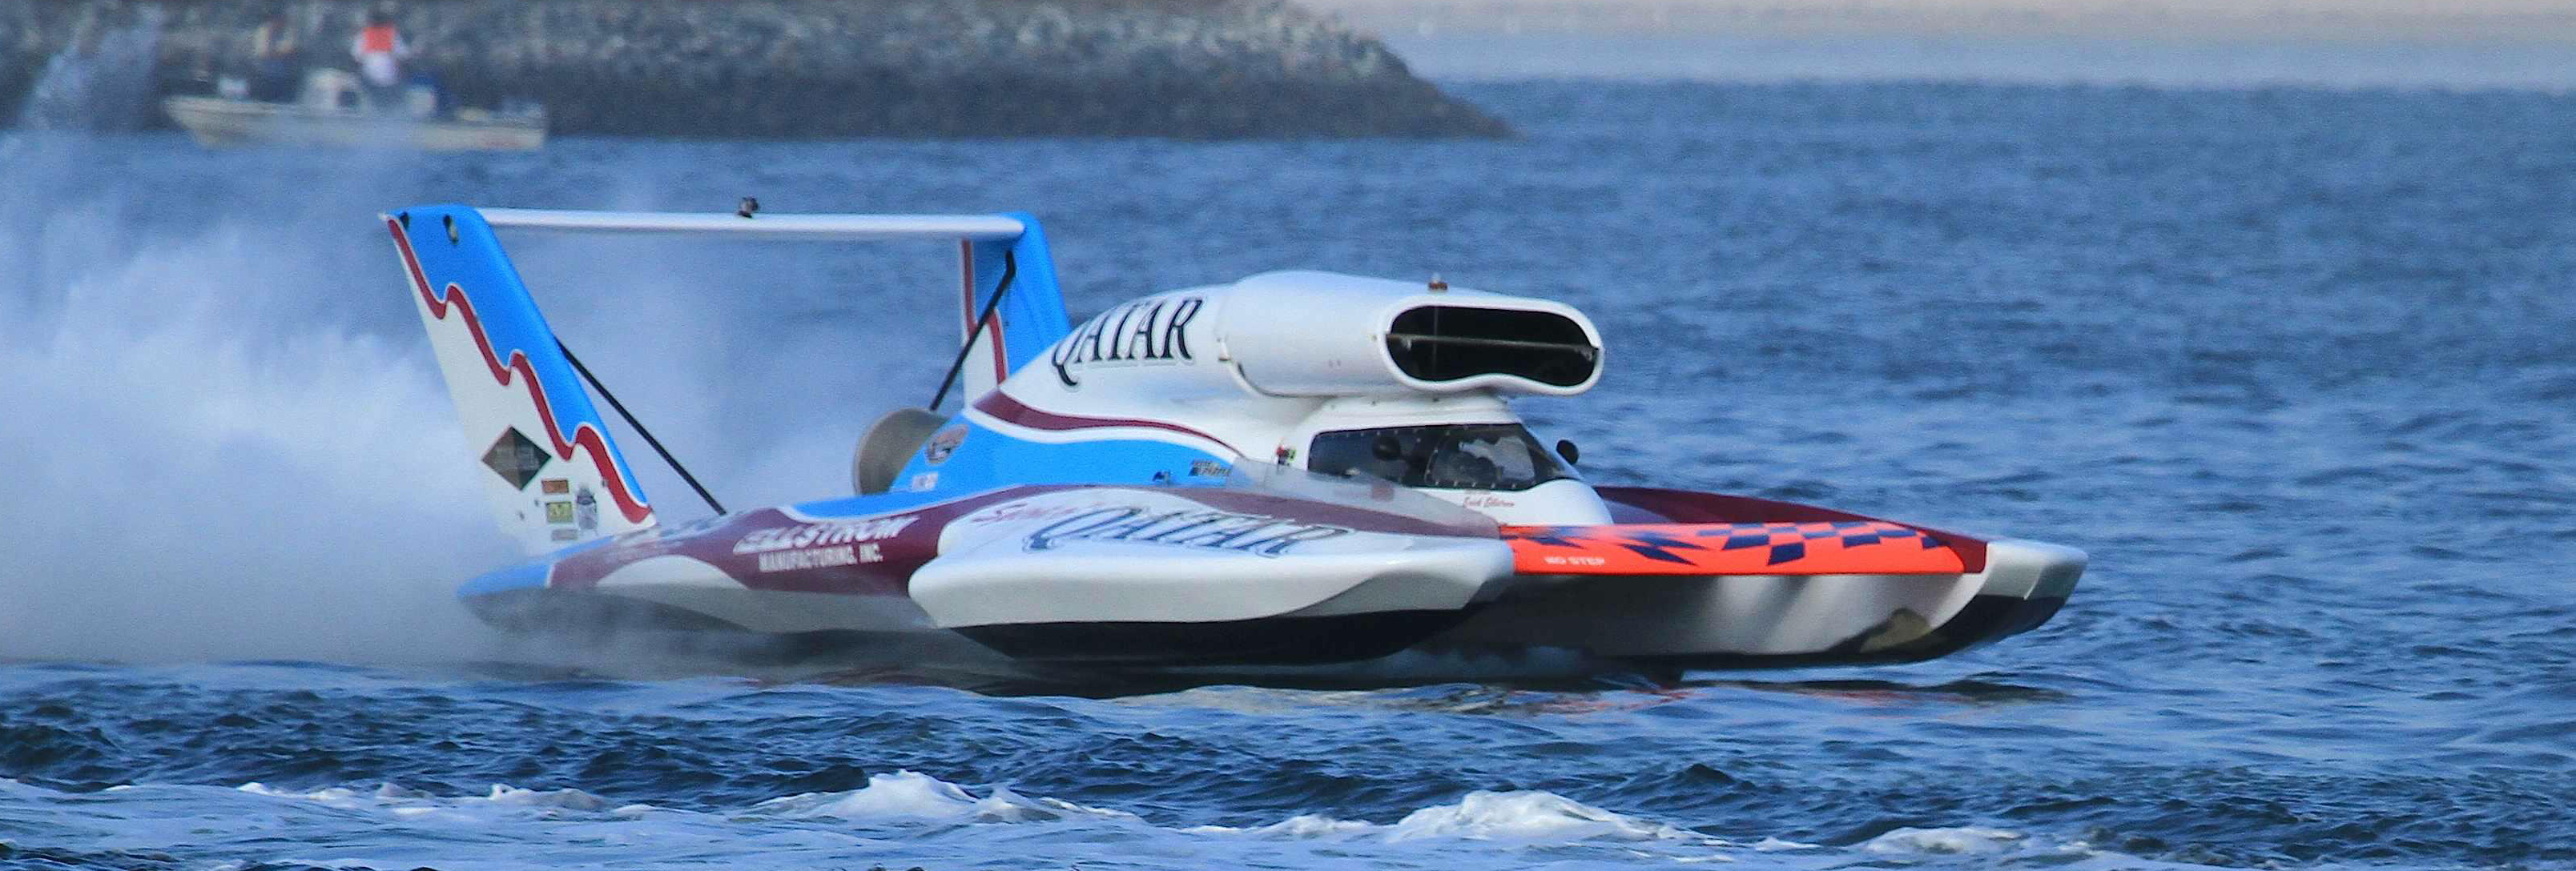 Race Racing Jet Hydroplane Boat Ship Hot Rod Rods T Wallpaper